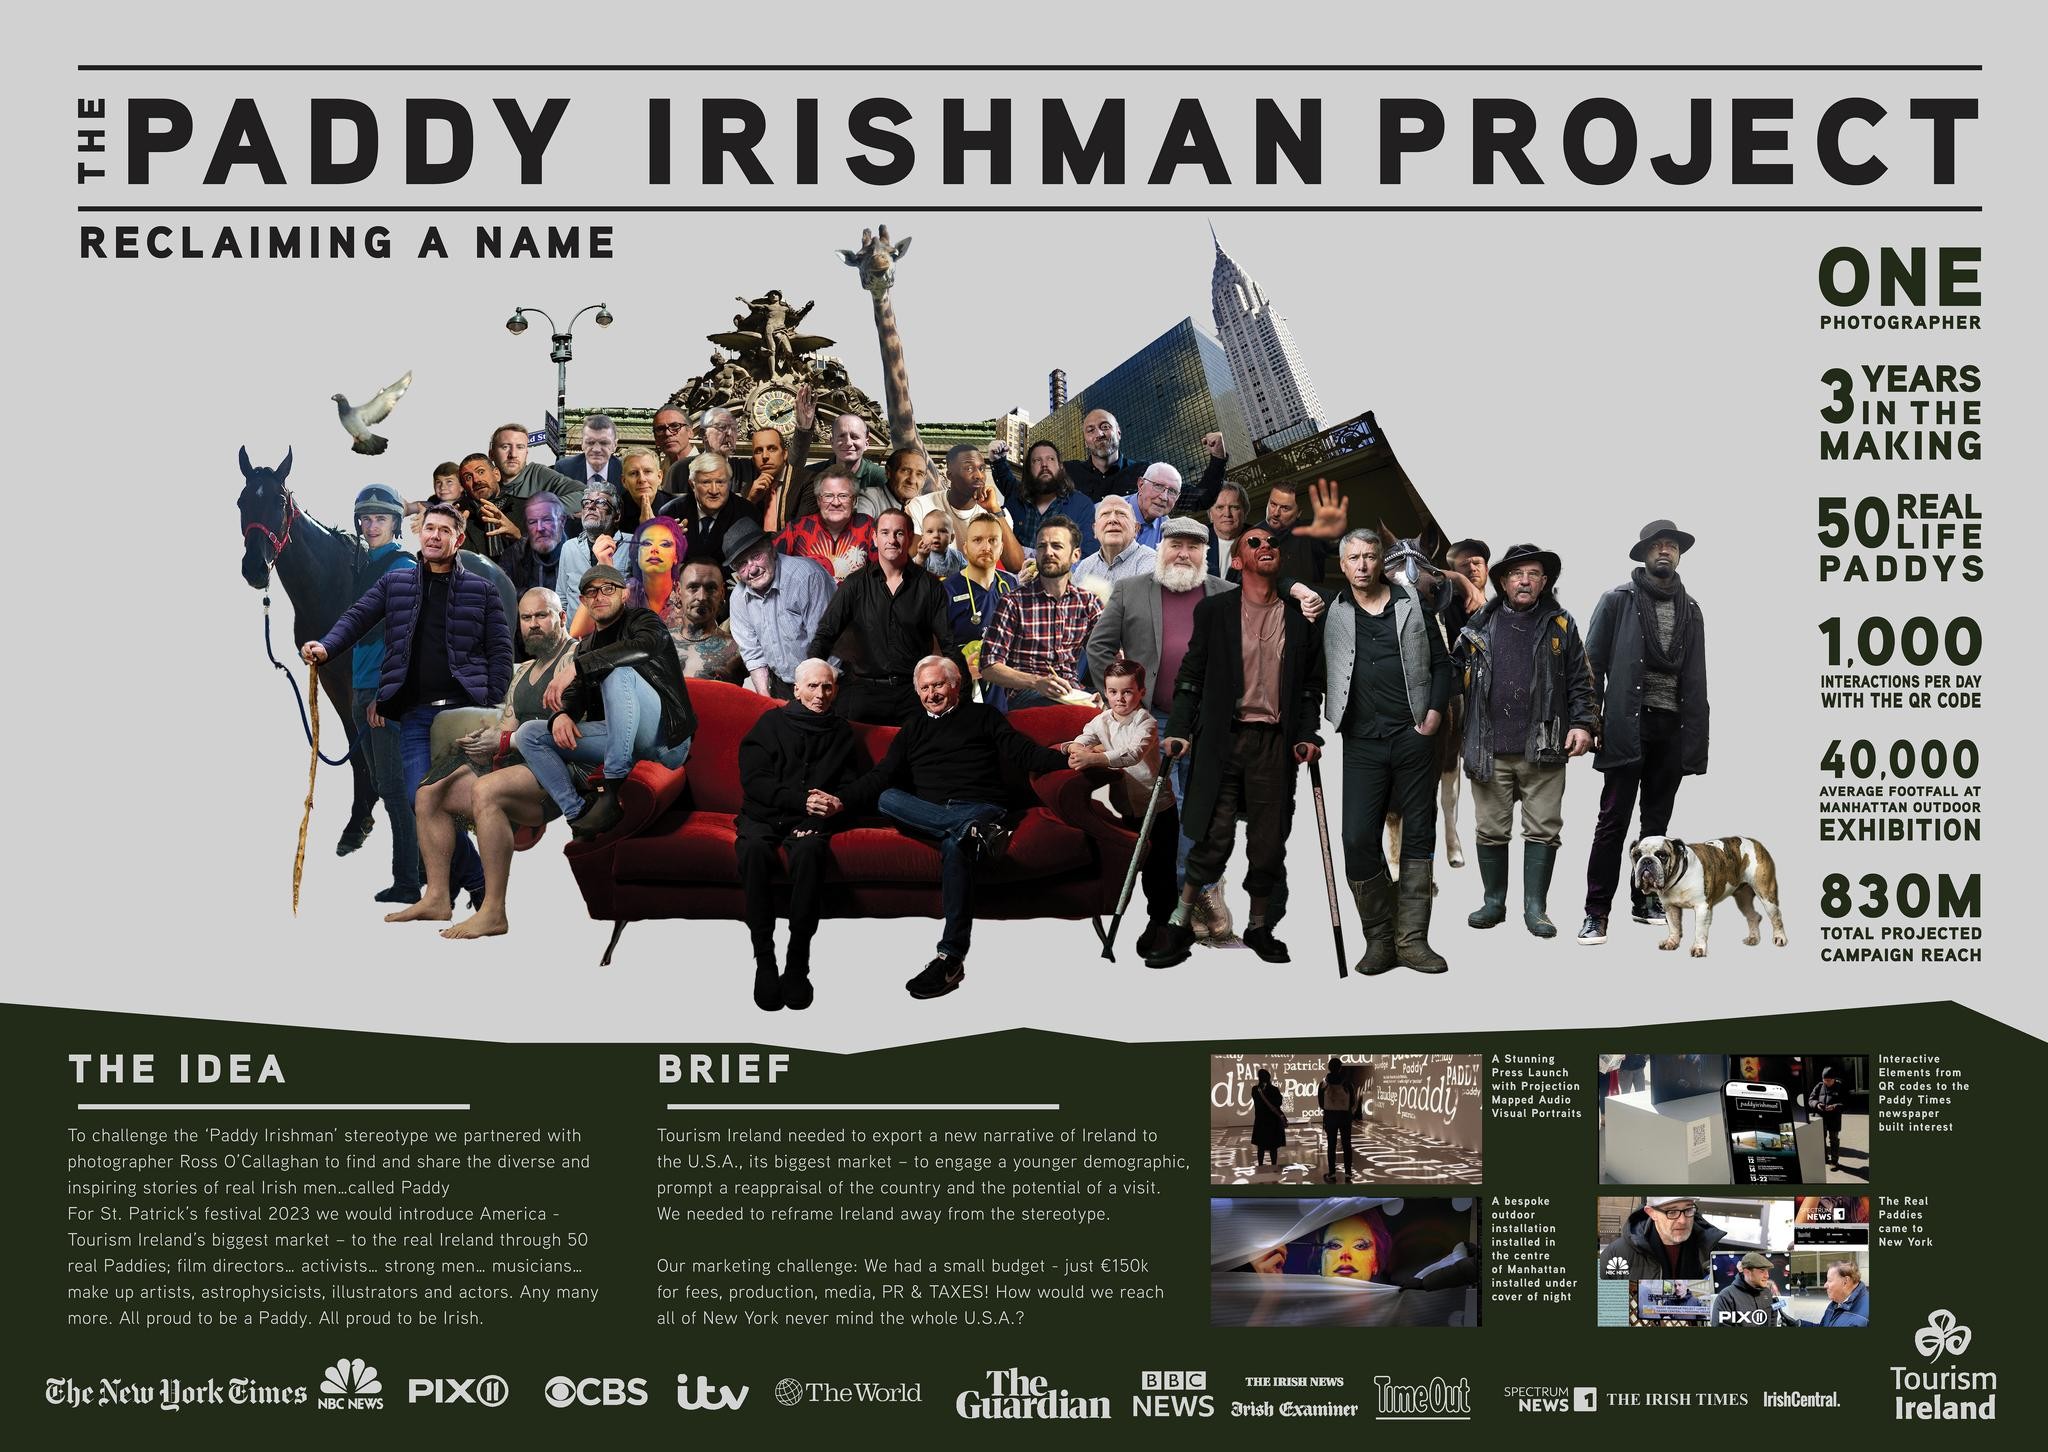 THE PADDY IRISHMAN PROJECT